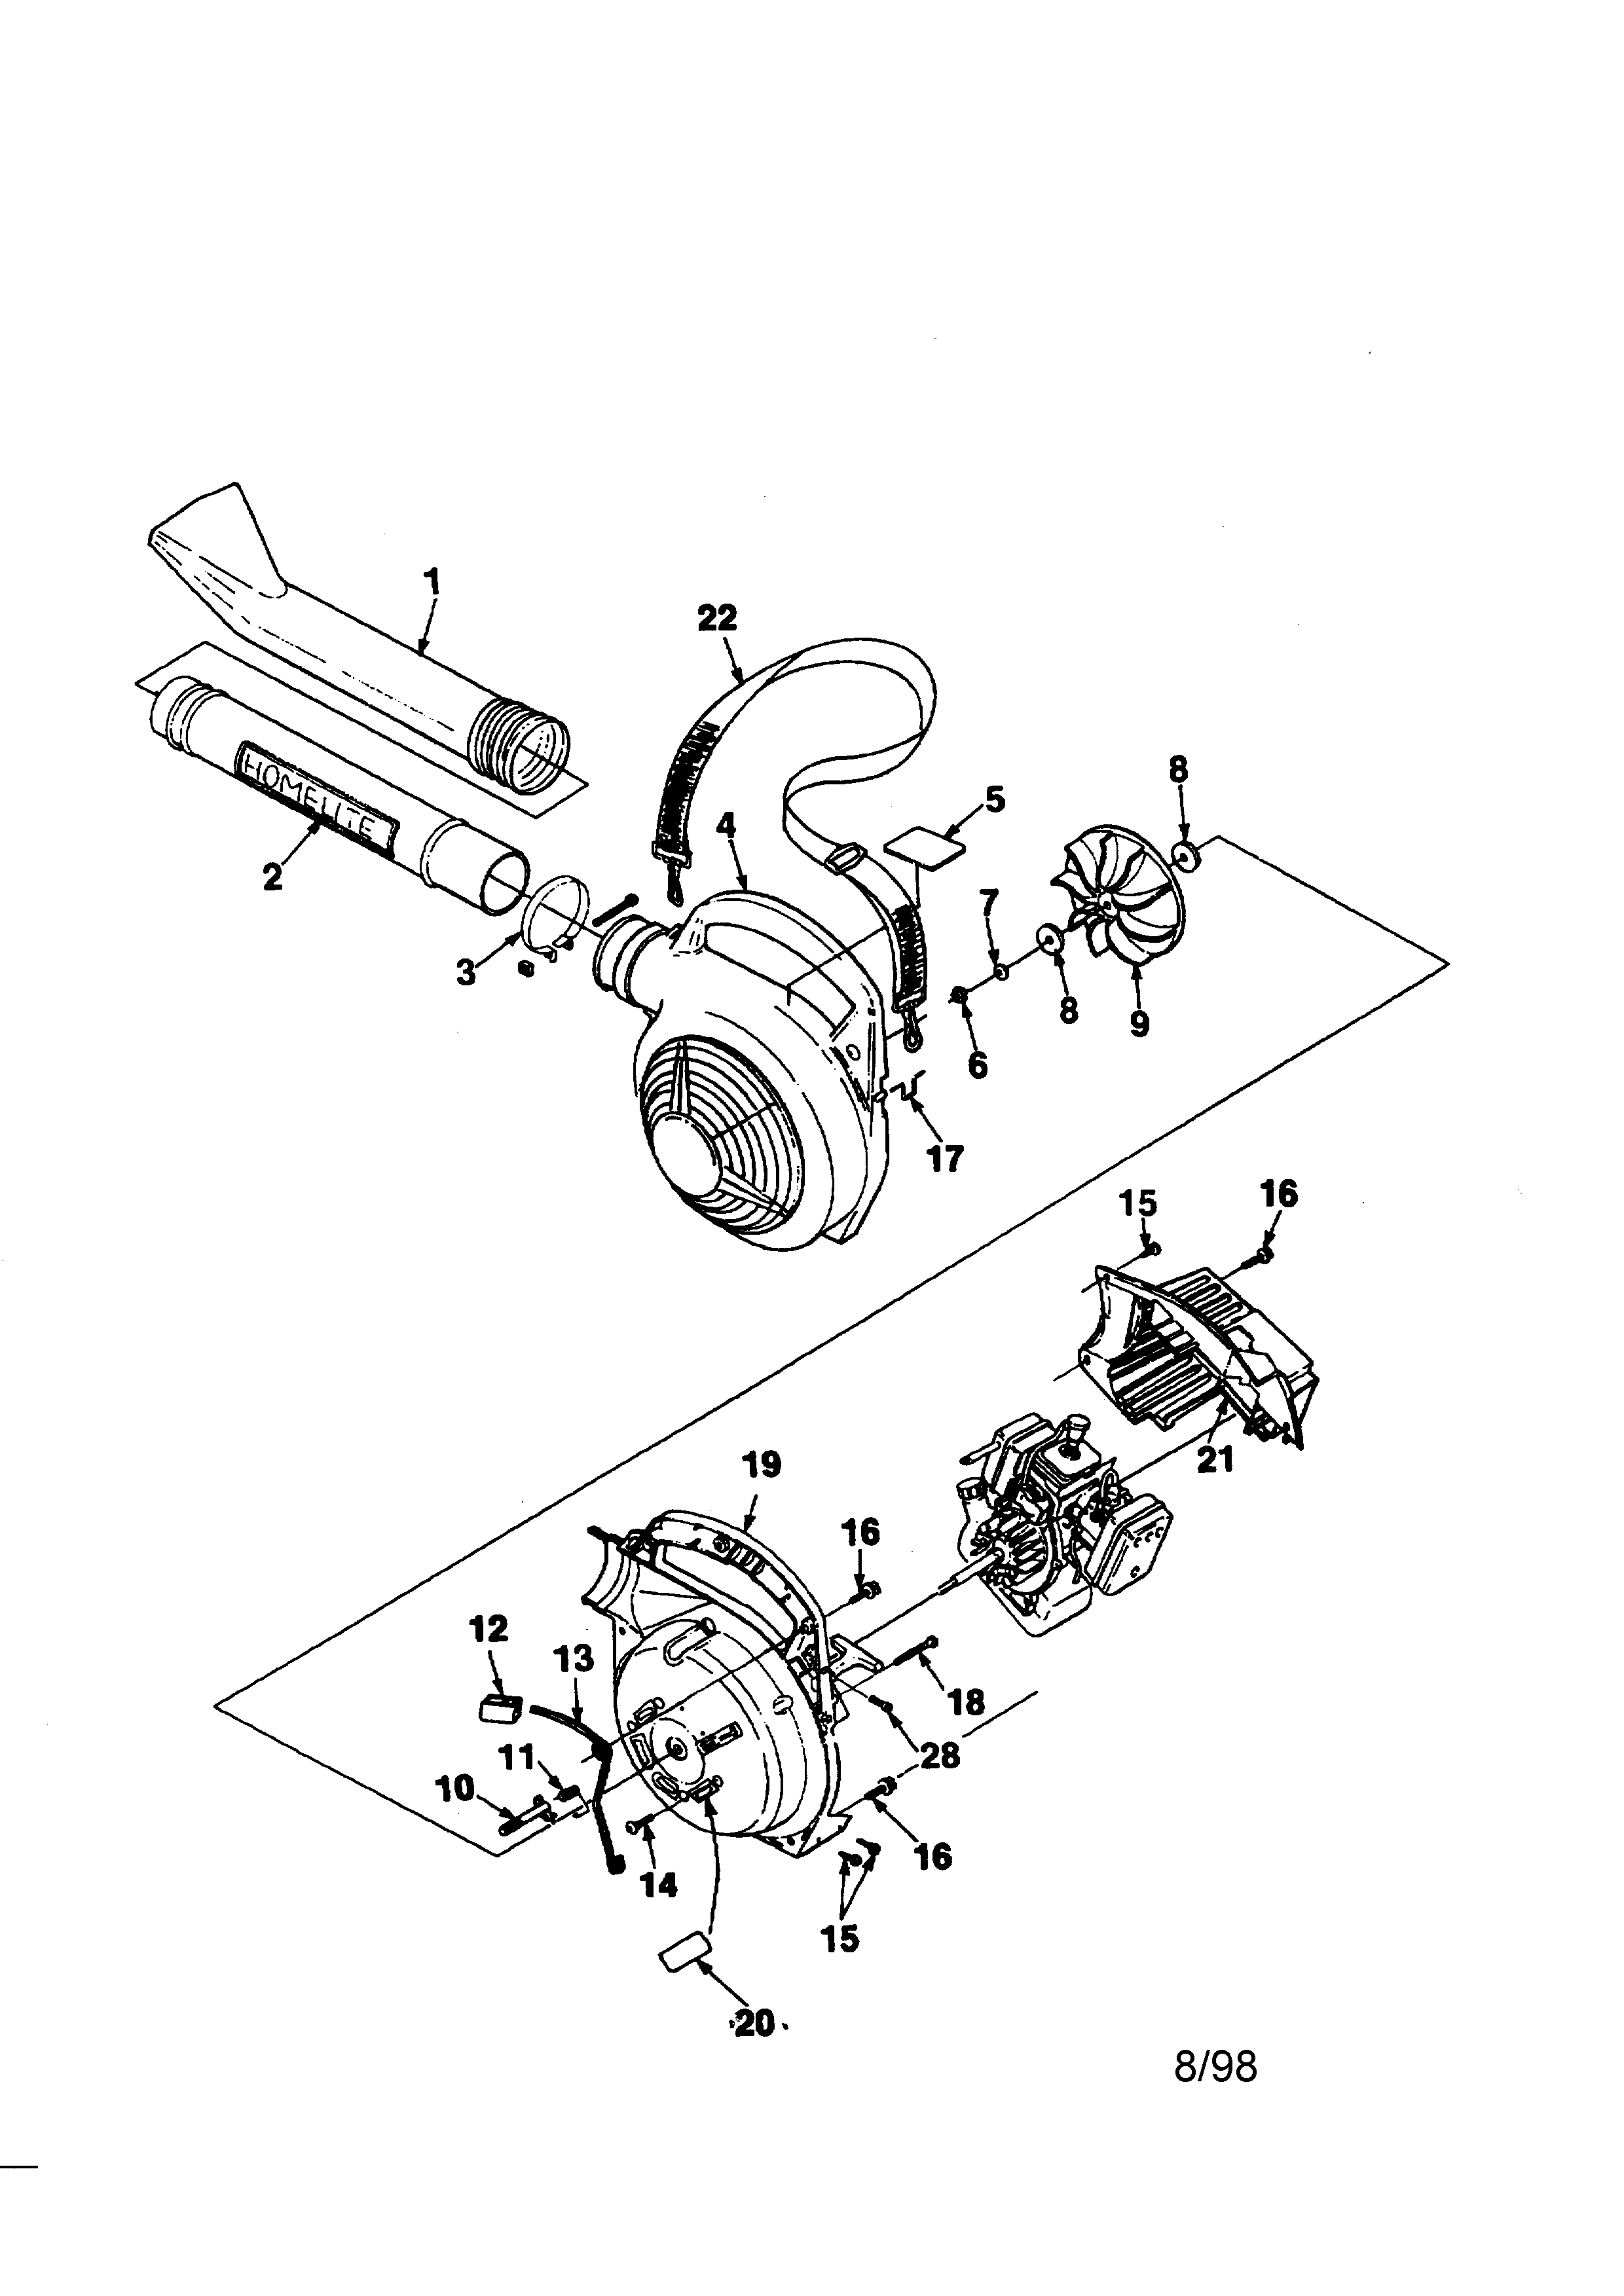 [DIAGRAM] Craftsman Leaf Blower Parts Diagram - MYDIAGRAM.ONLINE